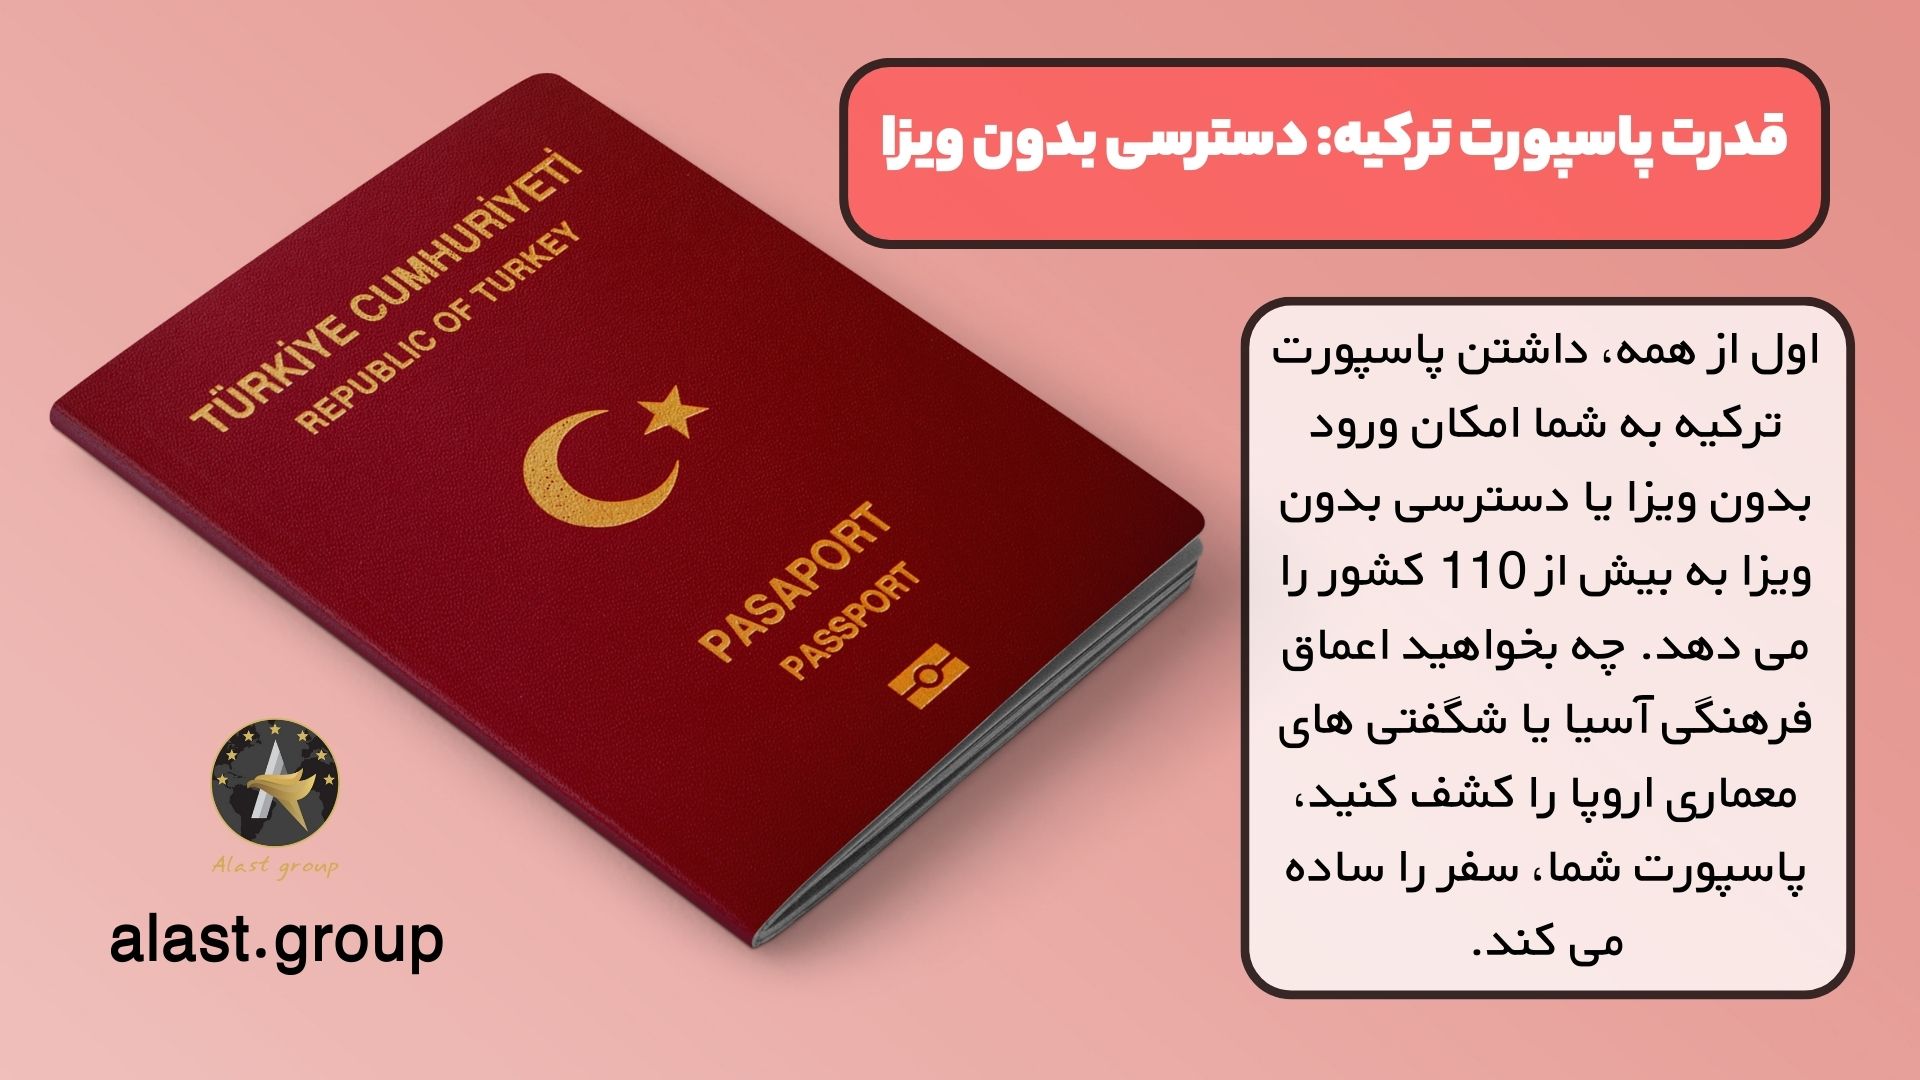 قدرت پاسپورت ترکیه: دسترسی بدون ویزا